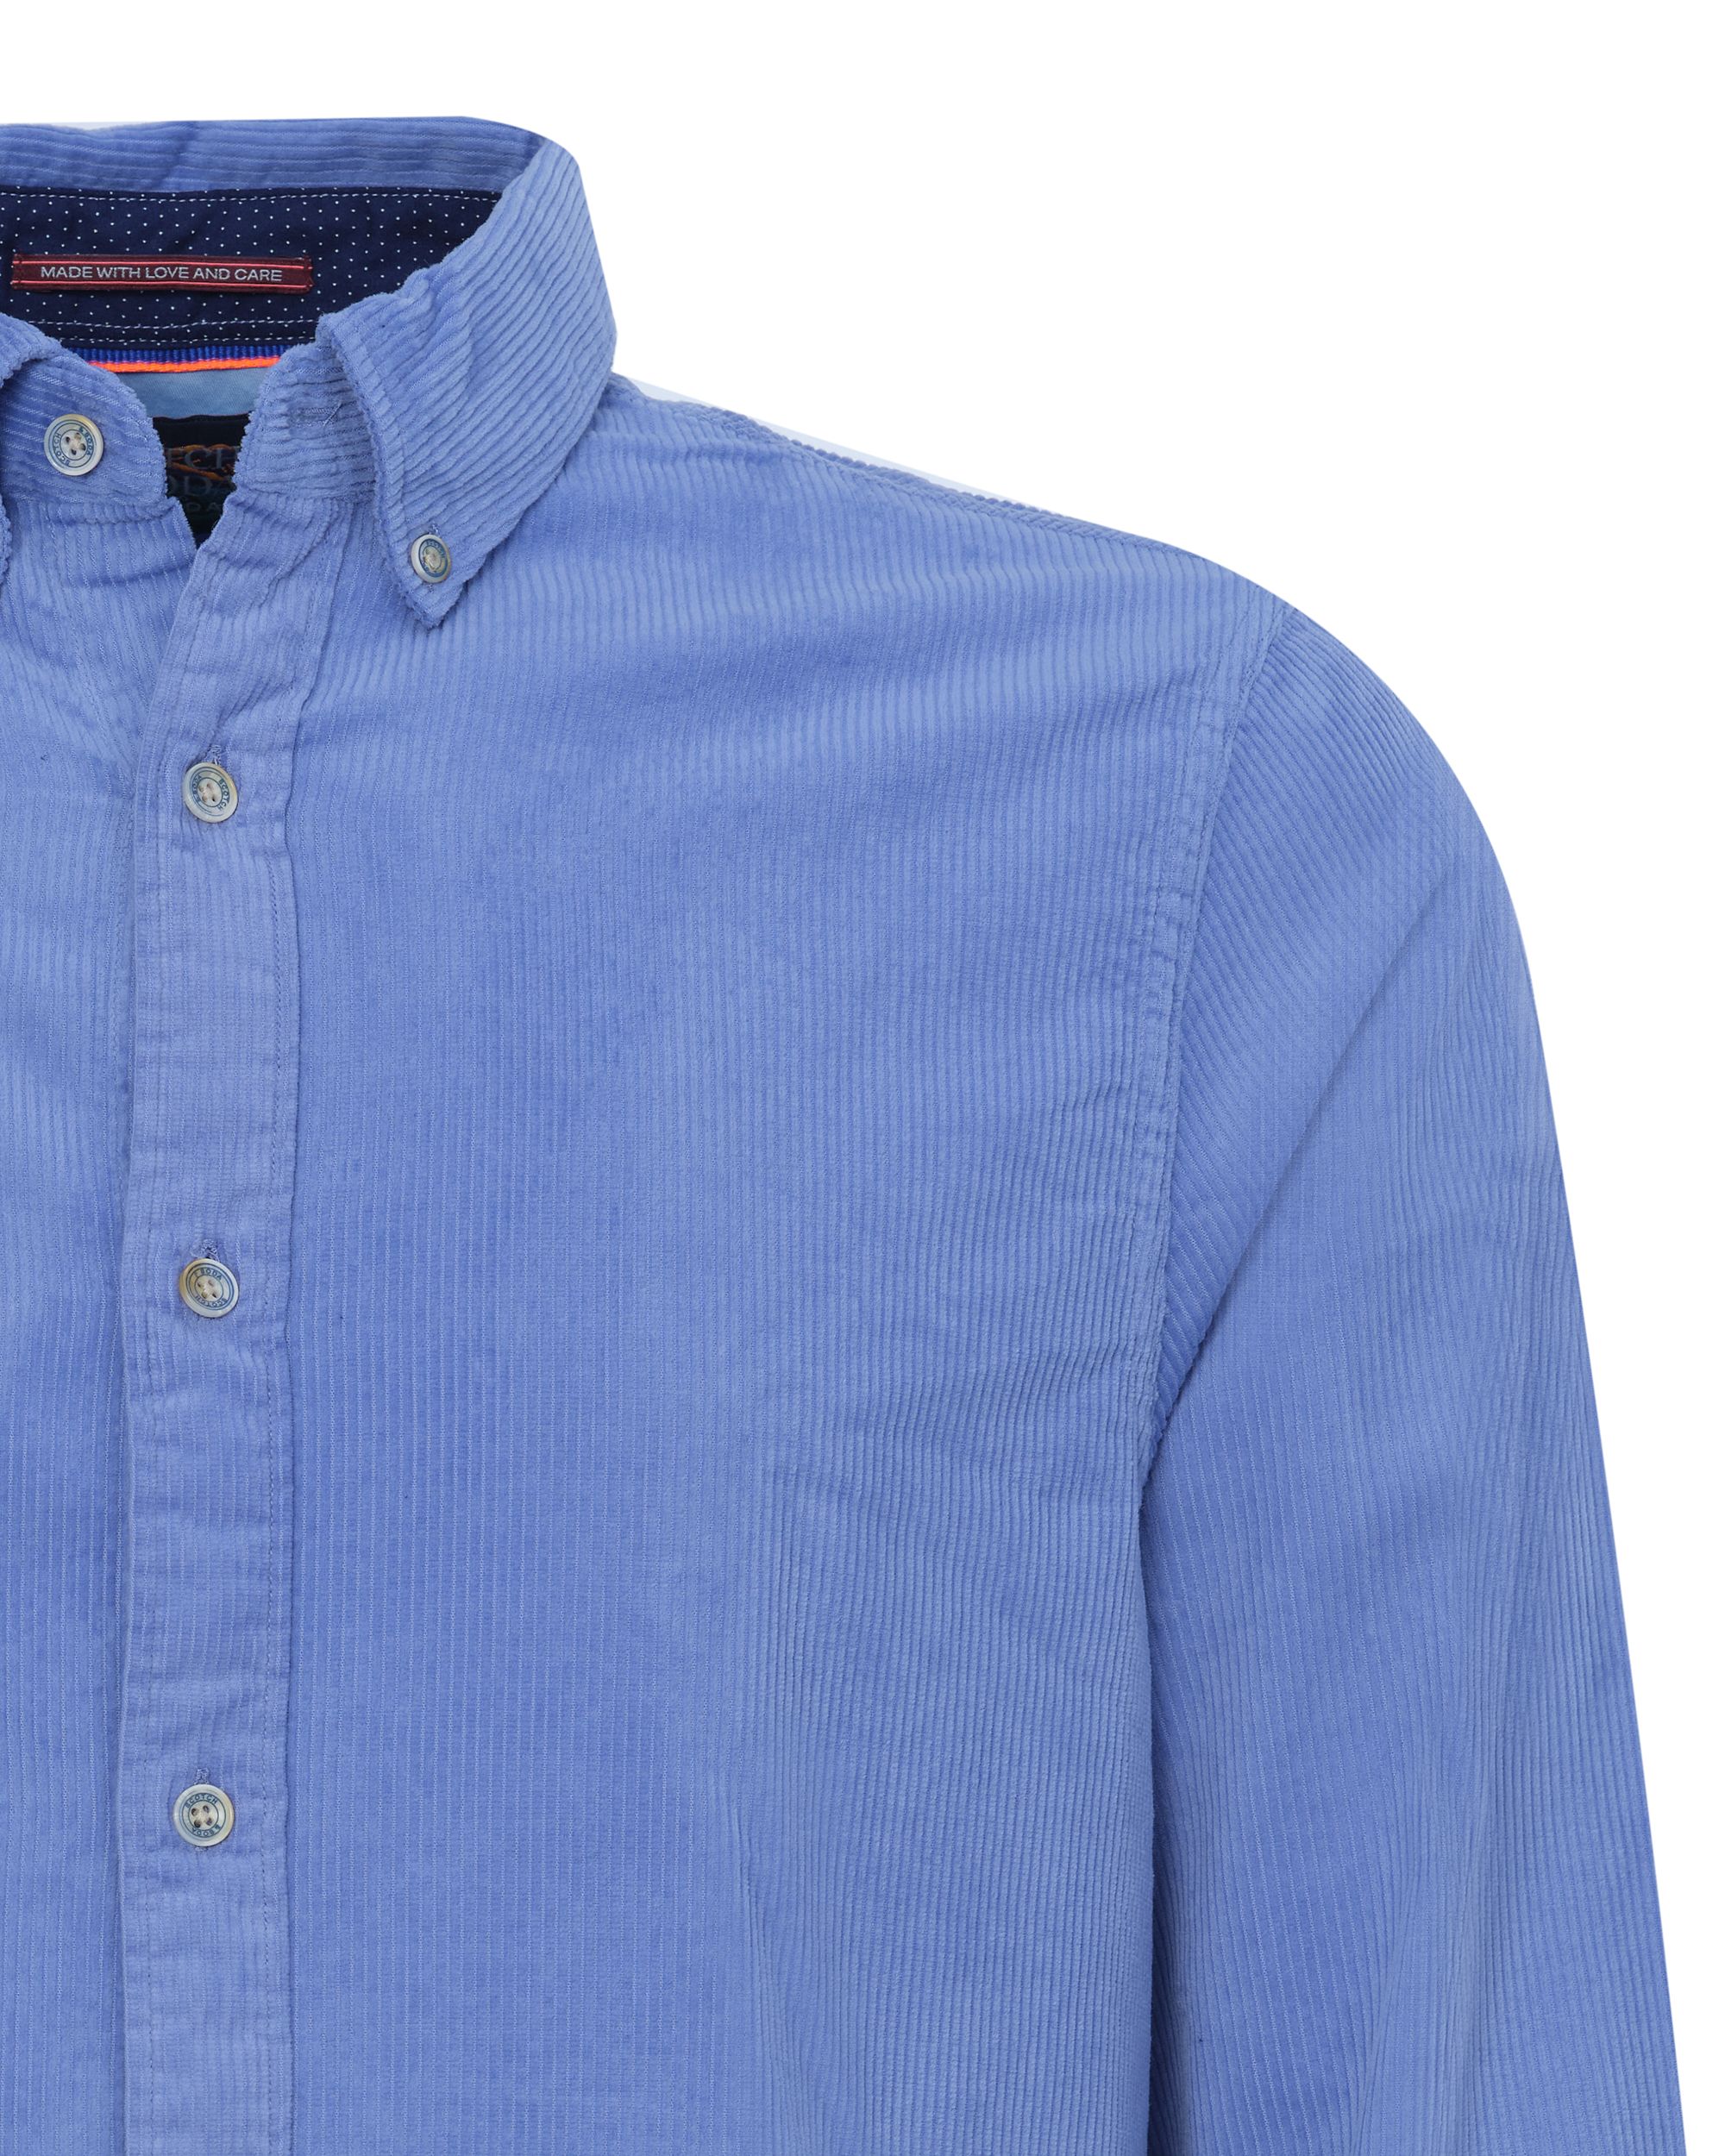 Scotch & Soda Casual Overhemd LM Blauw 082459-001-L